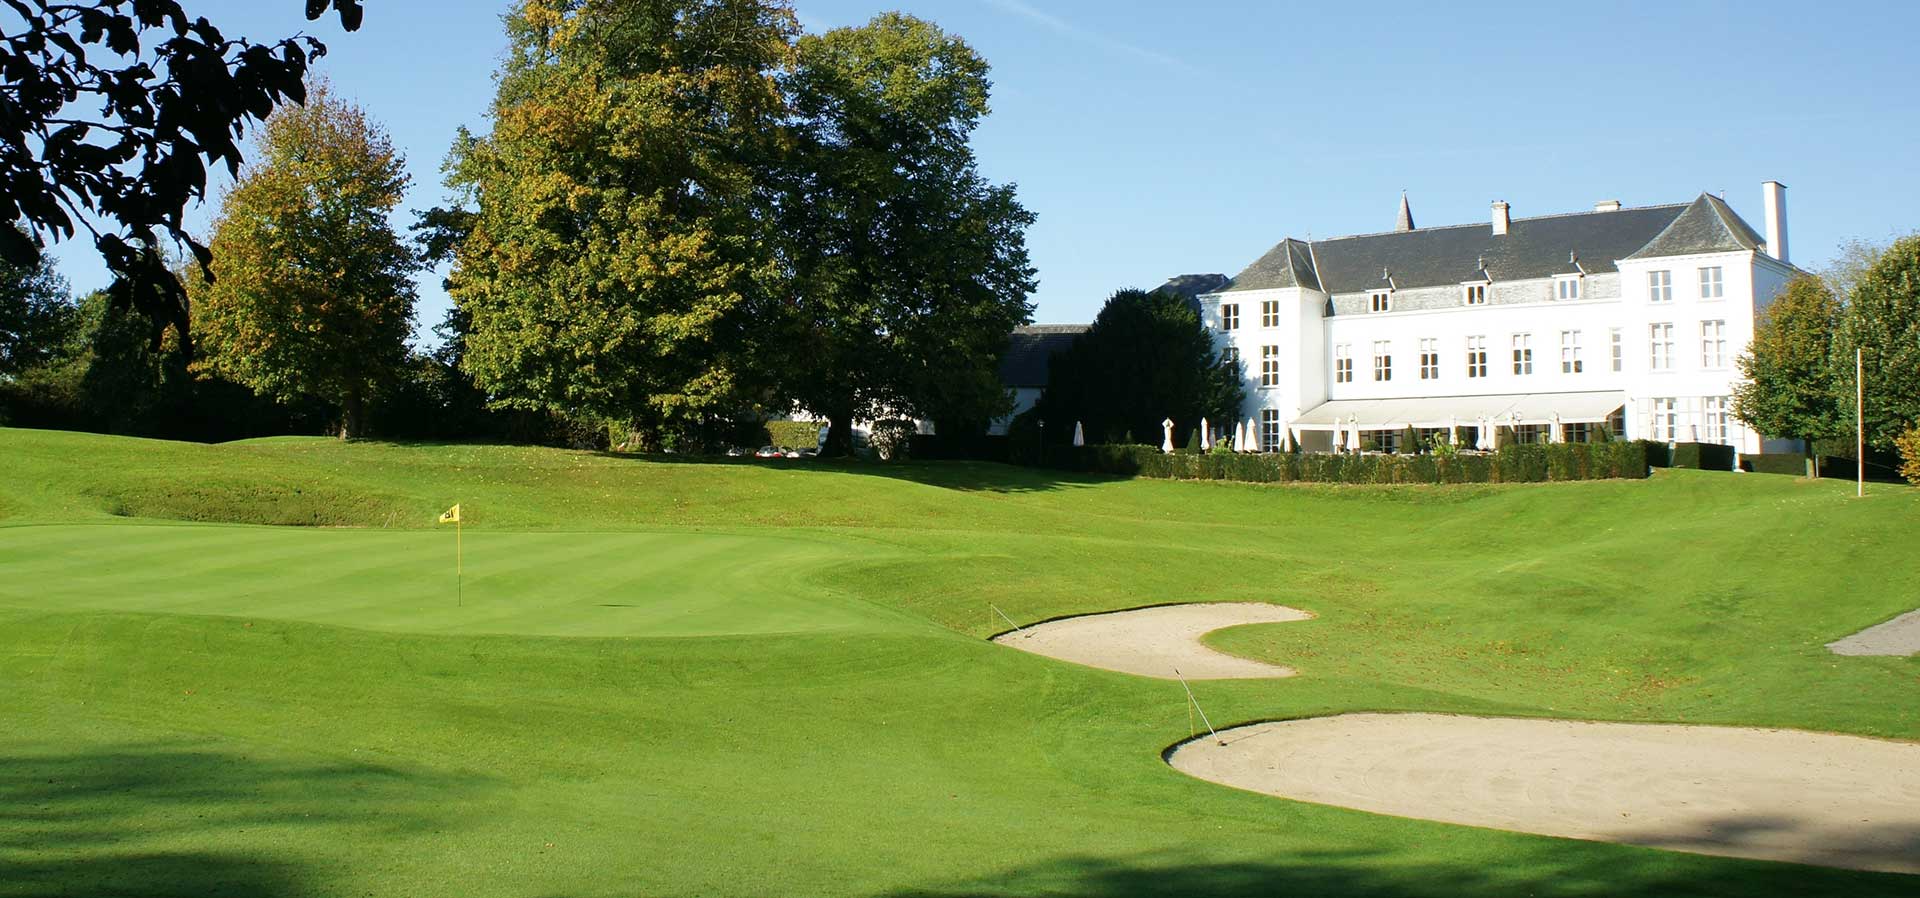 Golfexpedition-Golfreizen-België-Brussel-Grand-Hotel-Waterloo-course-wit-huis-zand-gras